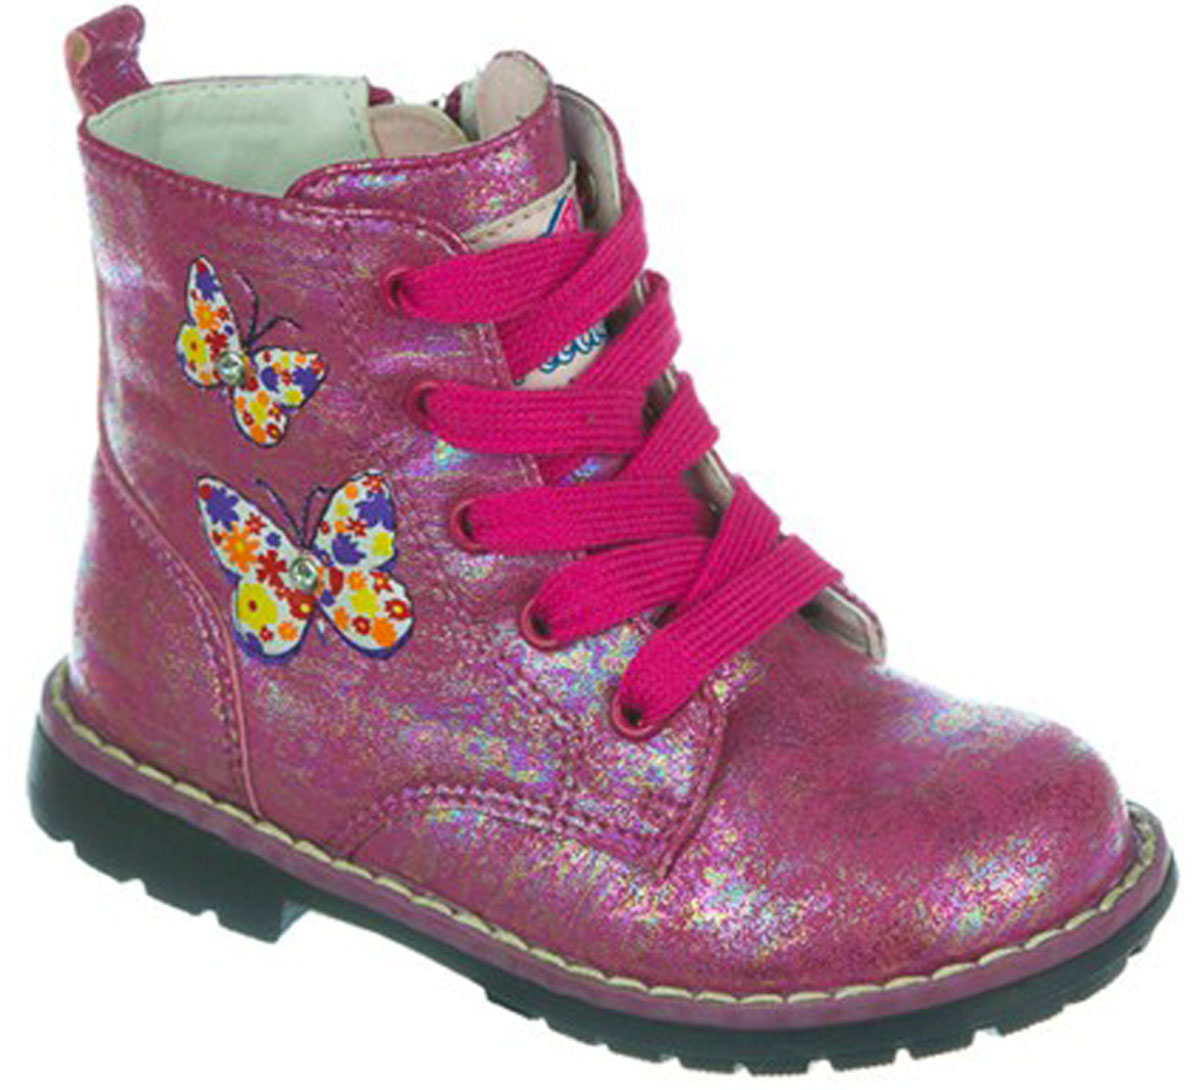 Ботинки для девочки Indigo Kids, цвет: фуксия. 51-293A/12. Размер 25